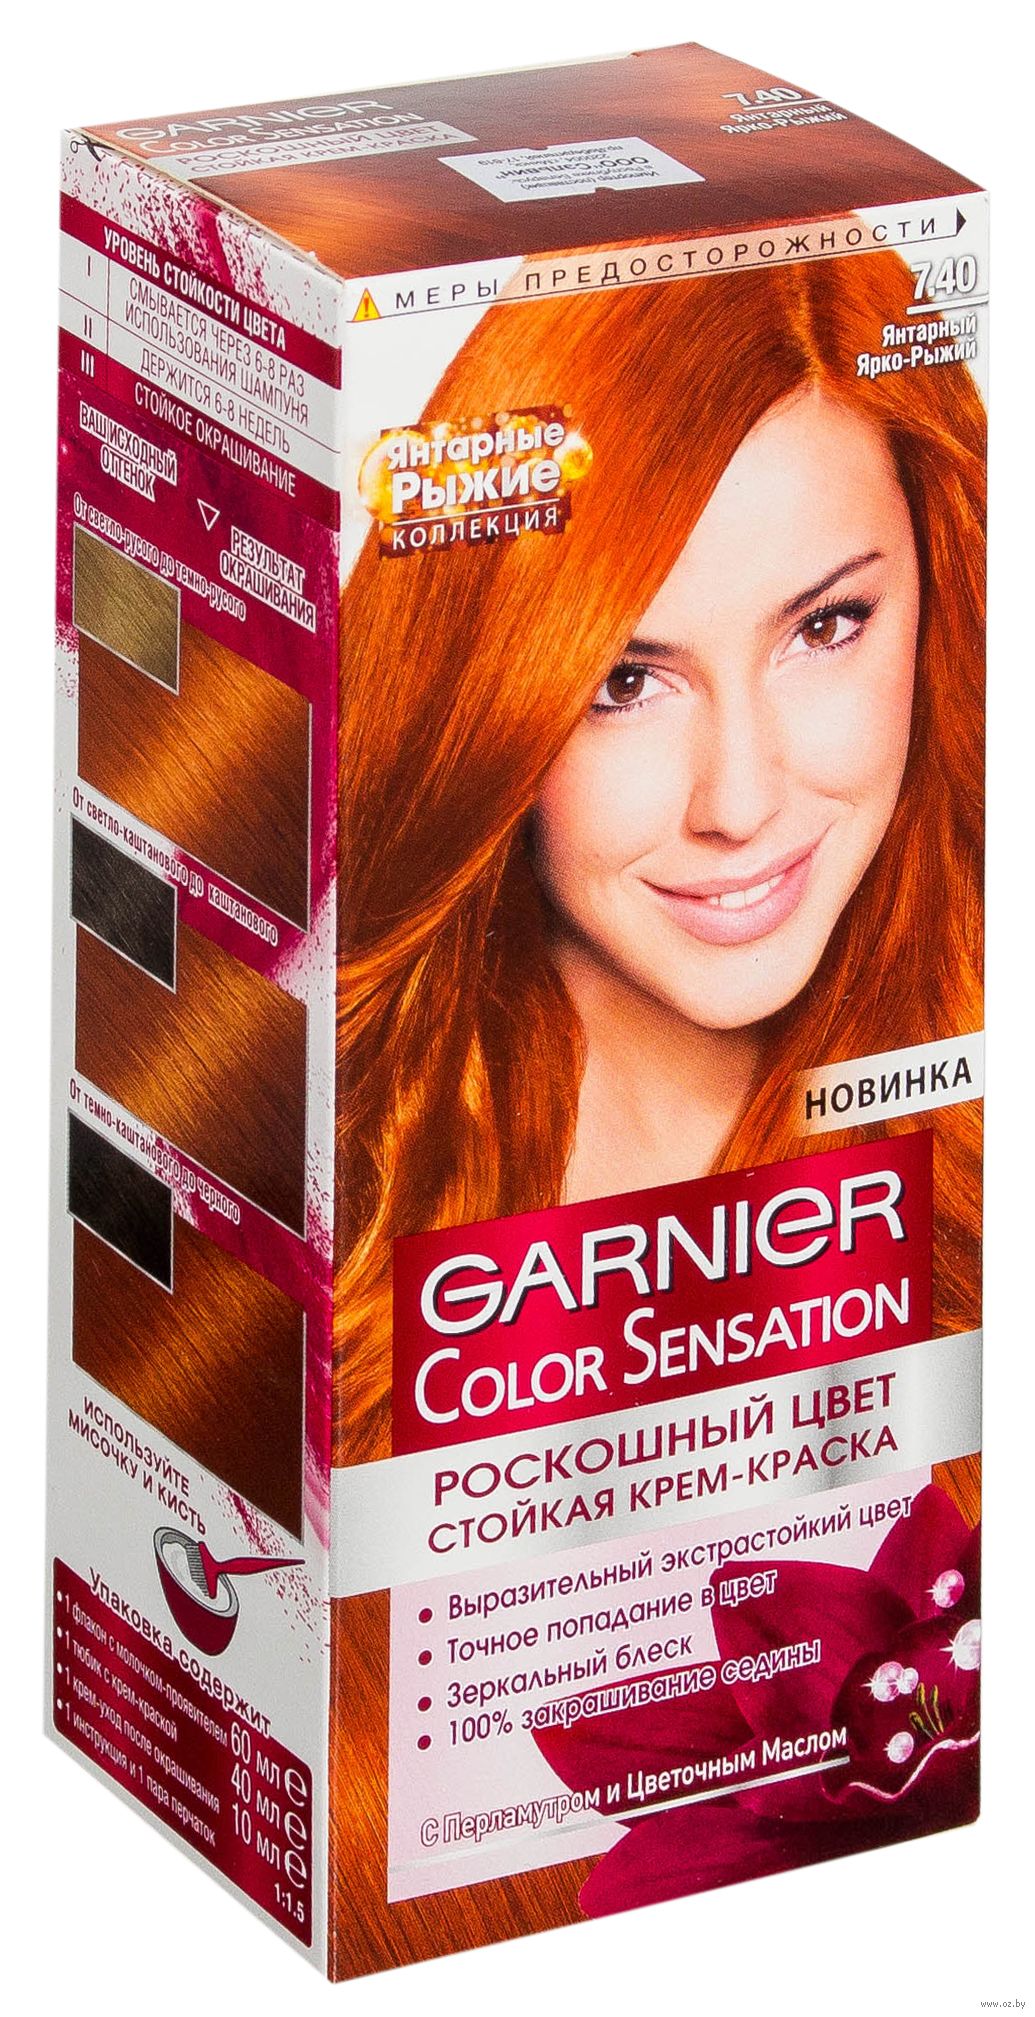 Краска Garnier рыжий цвет 7.40